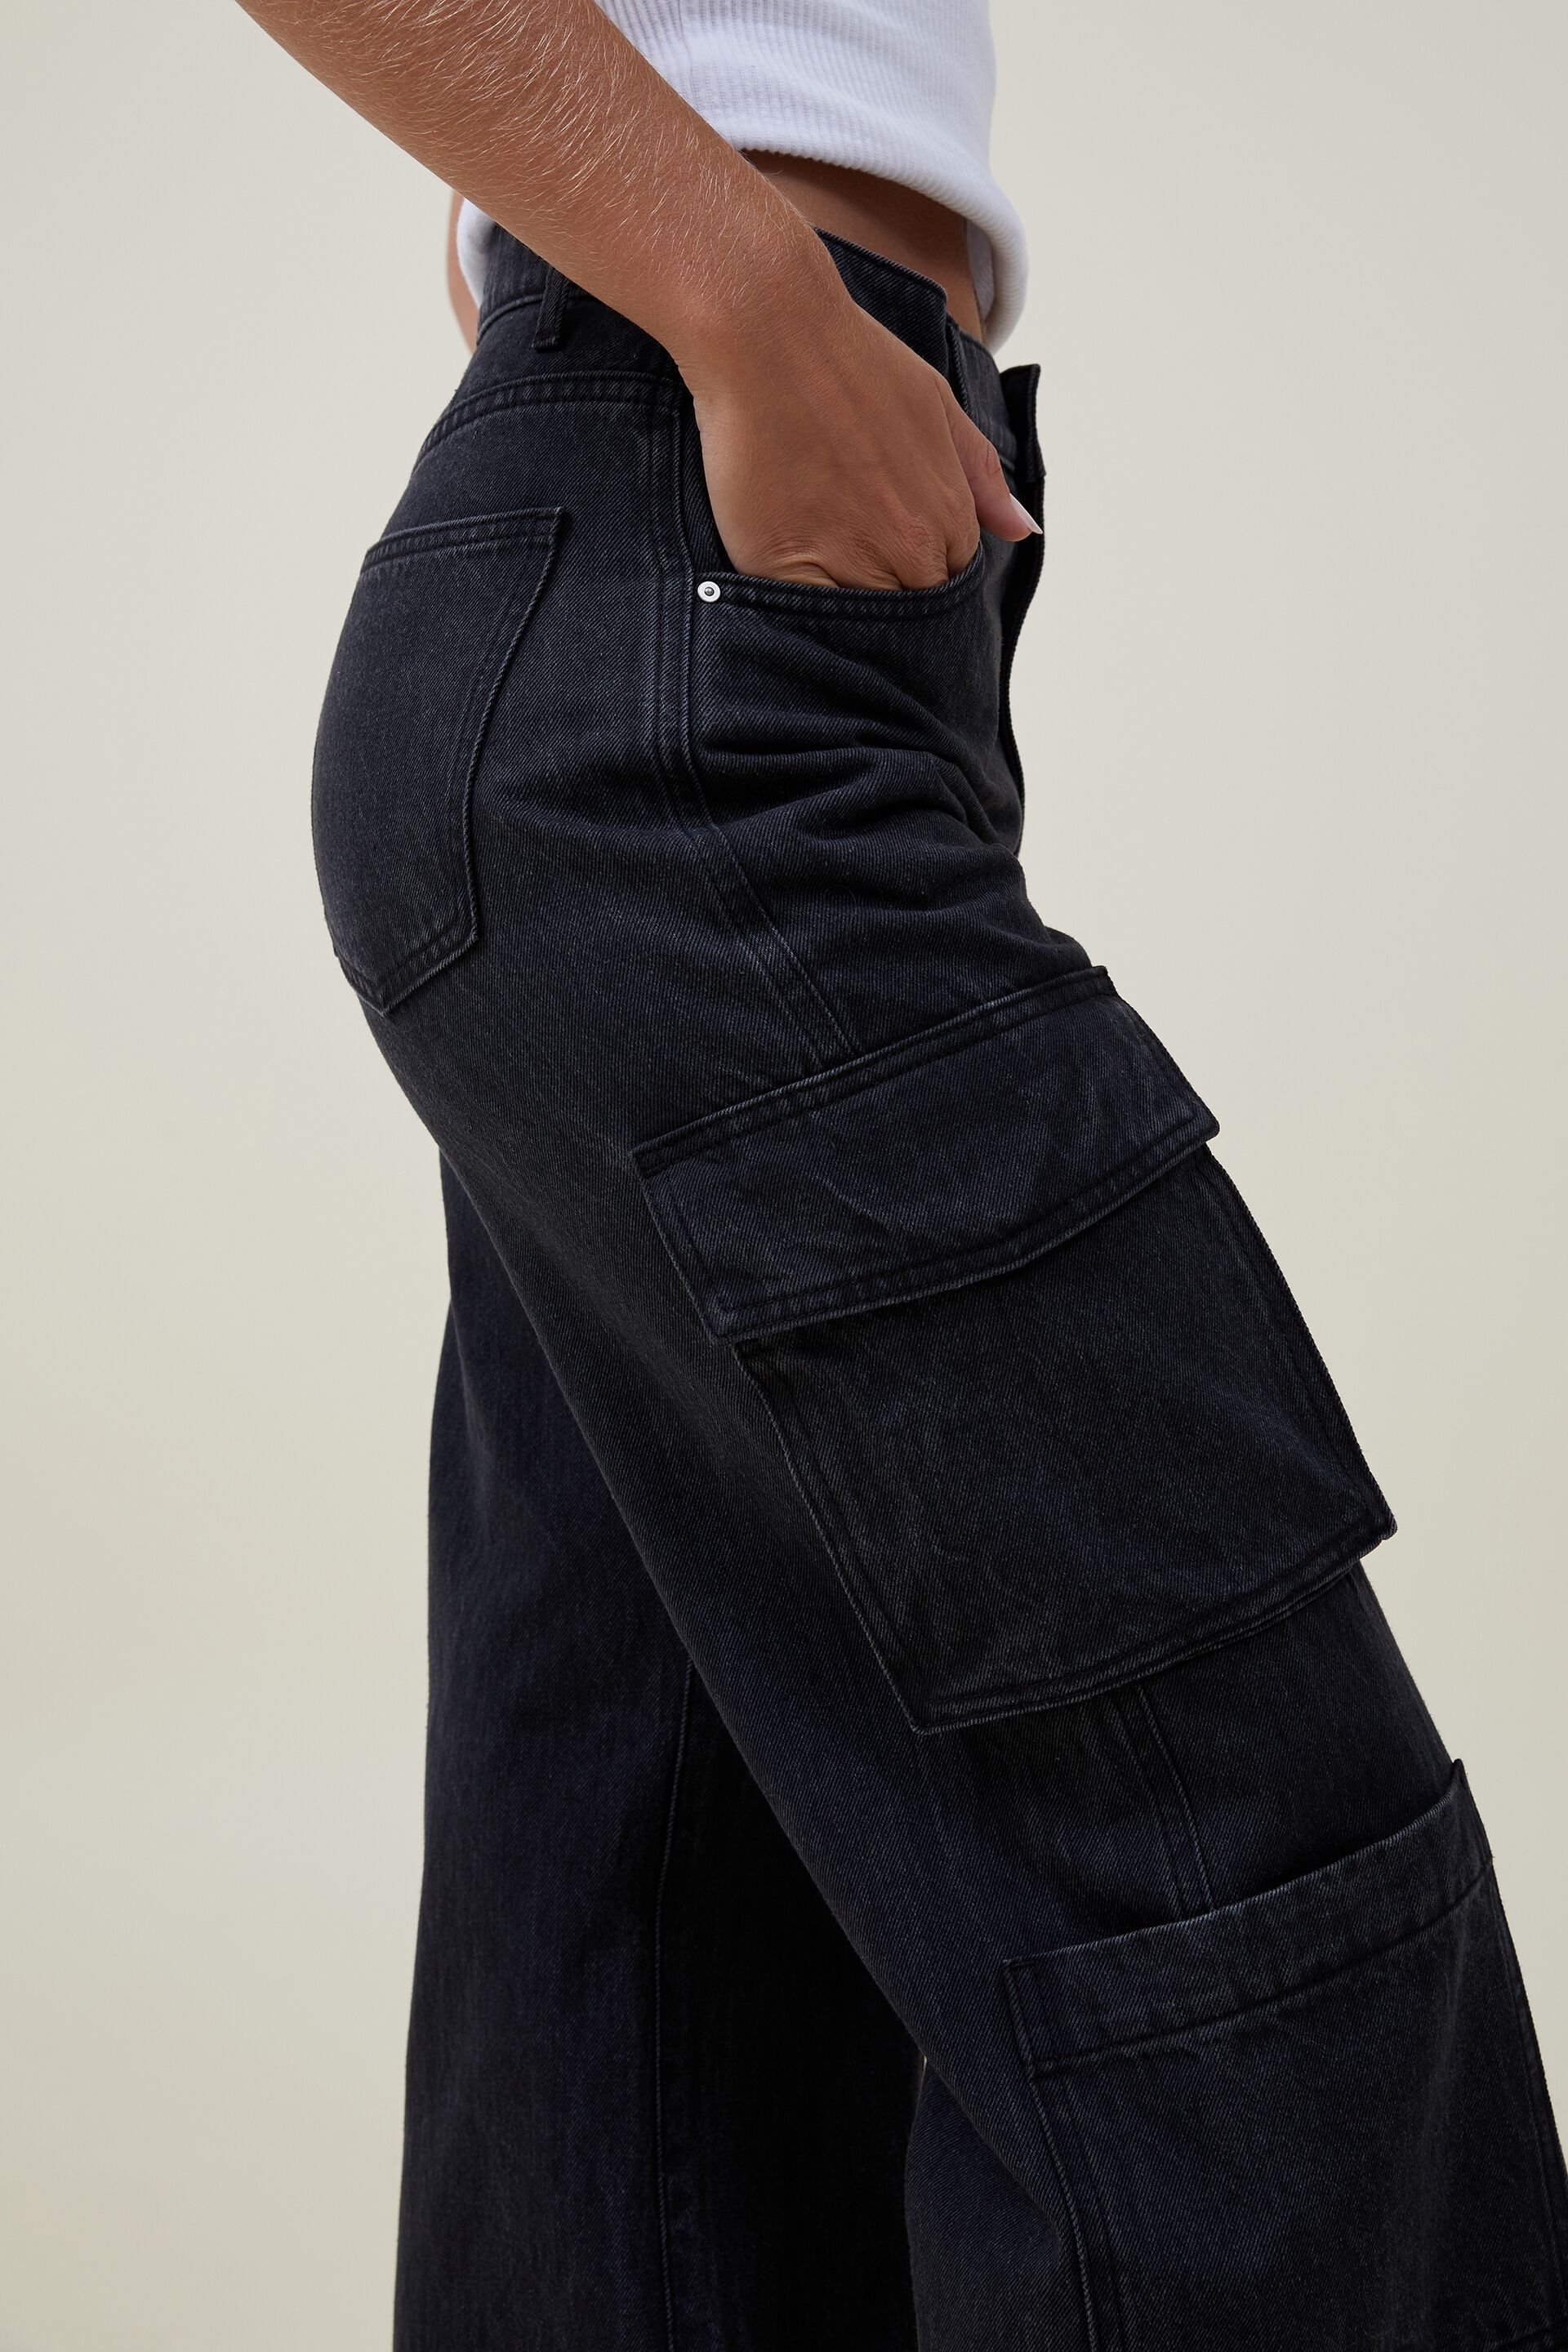 Buy Indo Denim Stylish Cotton Blend Men's Regular Fit Jeans (Black) at  Amazon.in